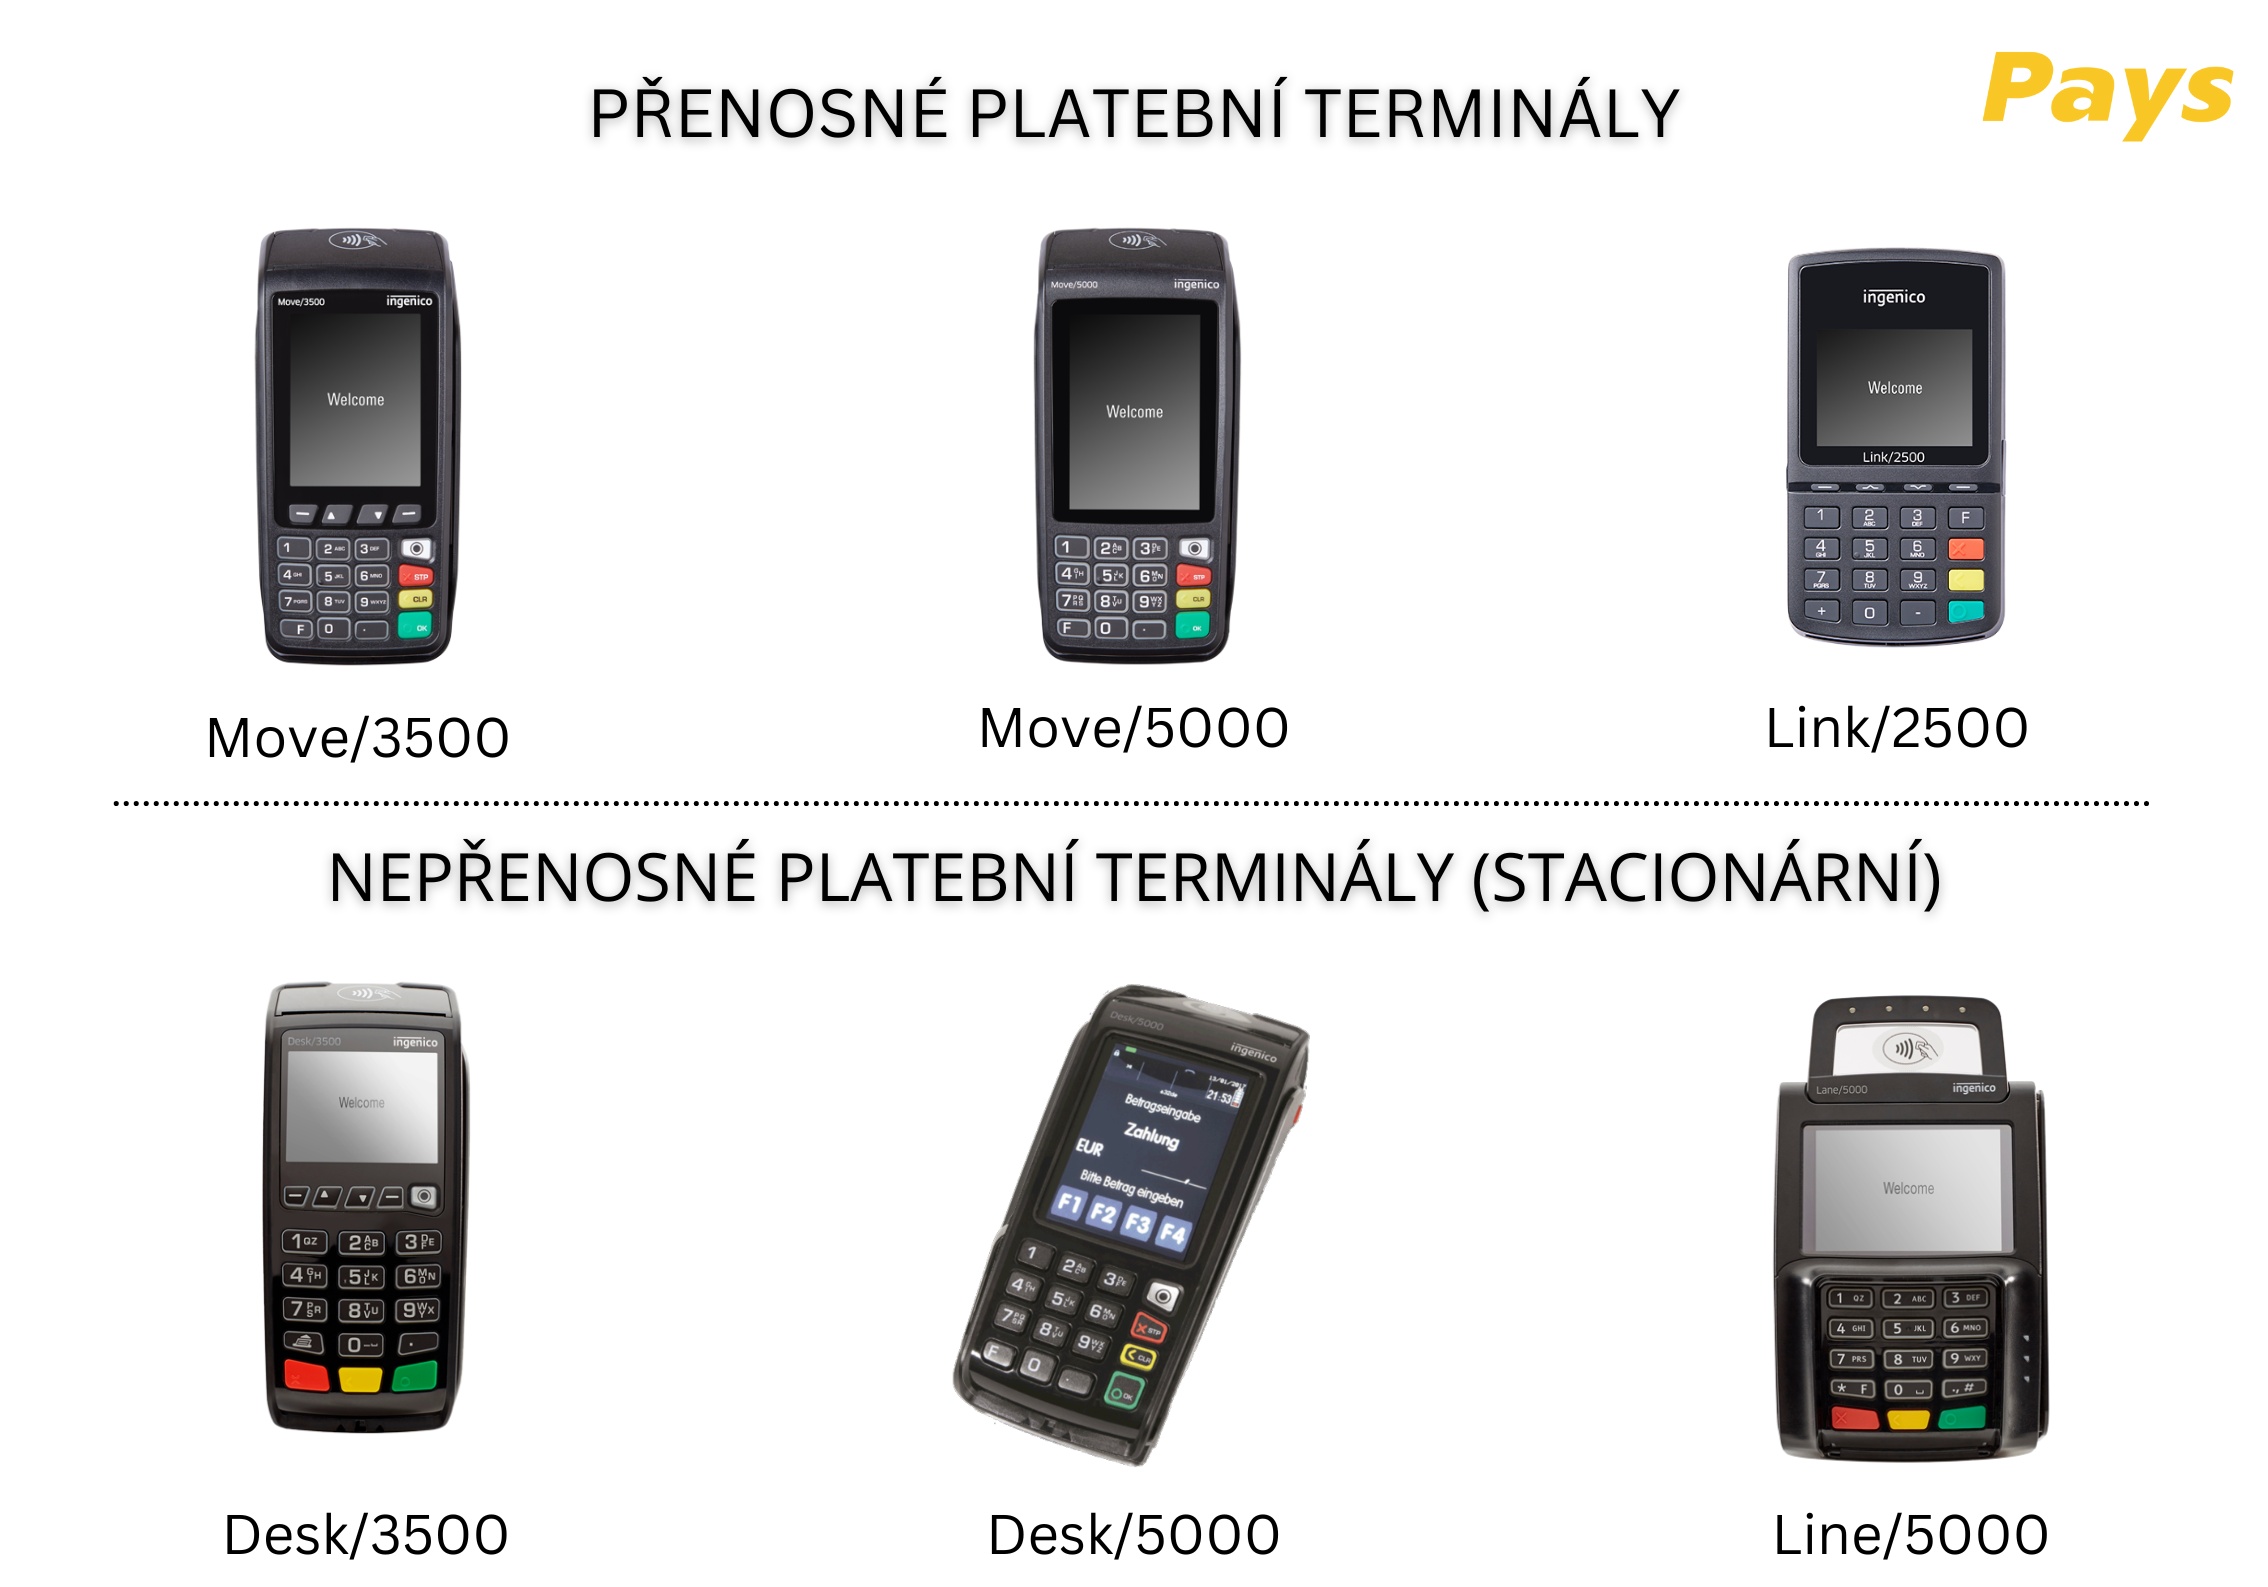 Obrázek shrnuje platební terminály uvedené v článku: Ingenico Move/3500, Move/5000, Link/2500, Desk/3500, Desk/5000, Lane/5000.